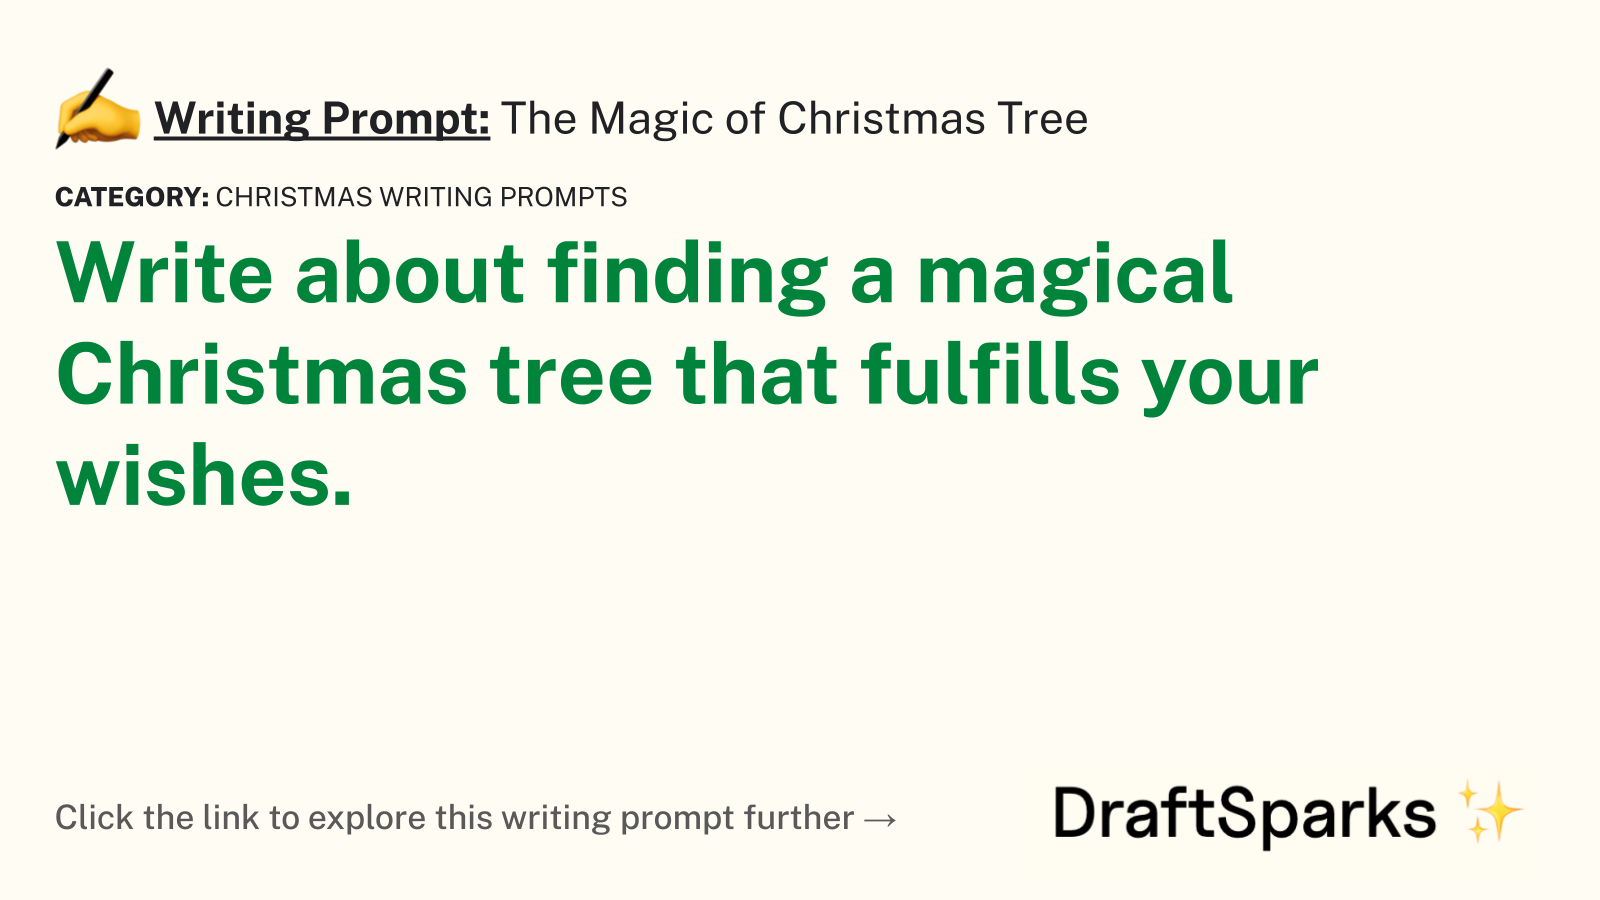 The Magic of Christmas Tree